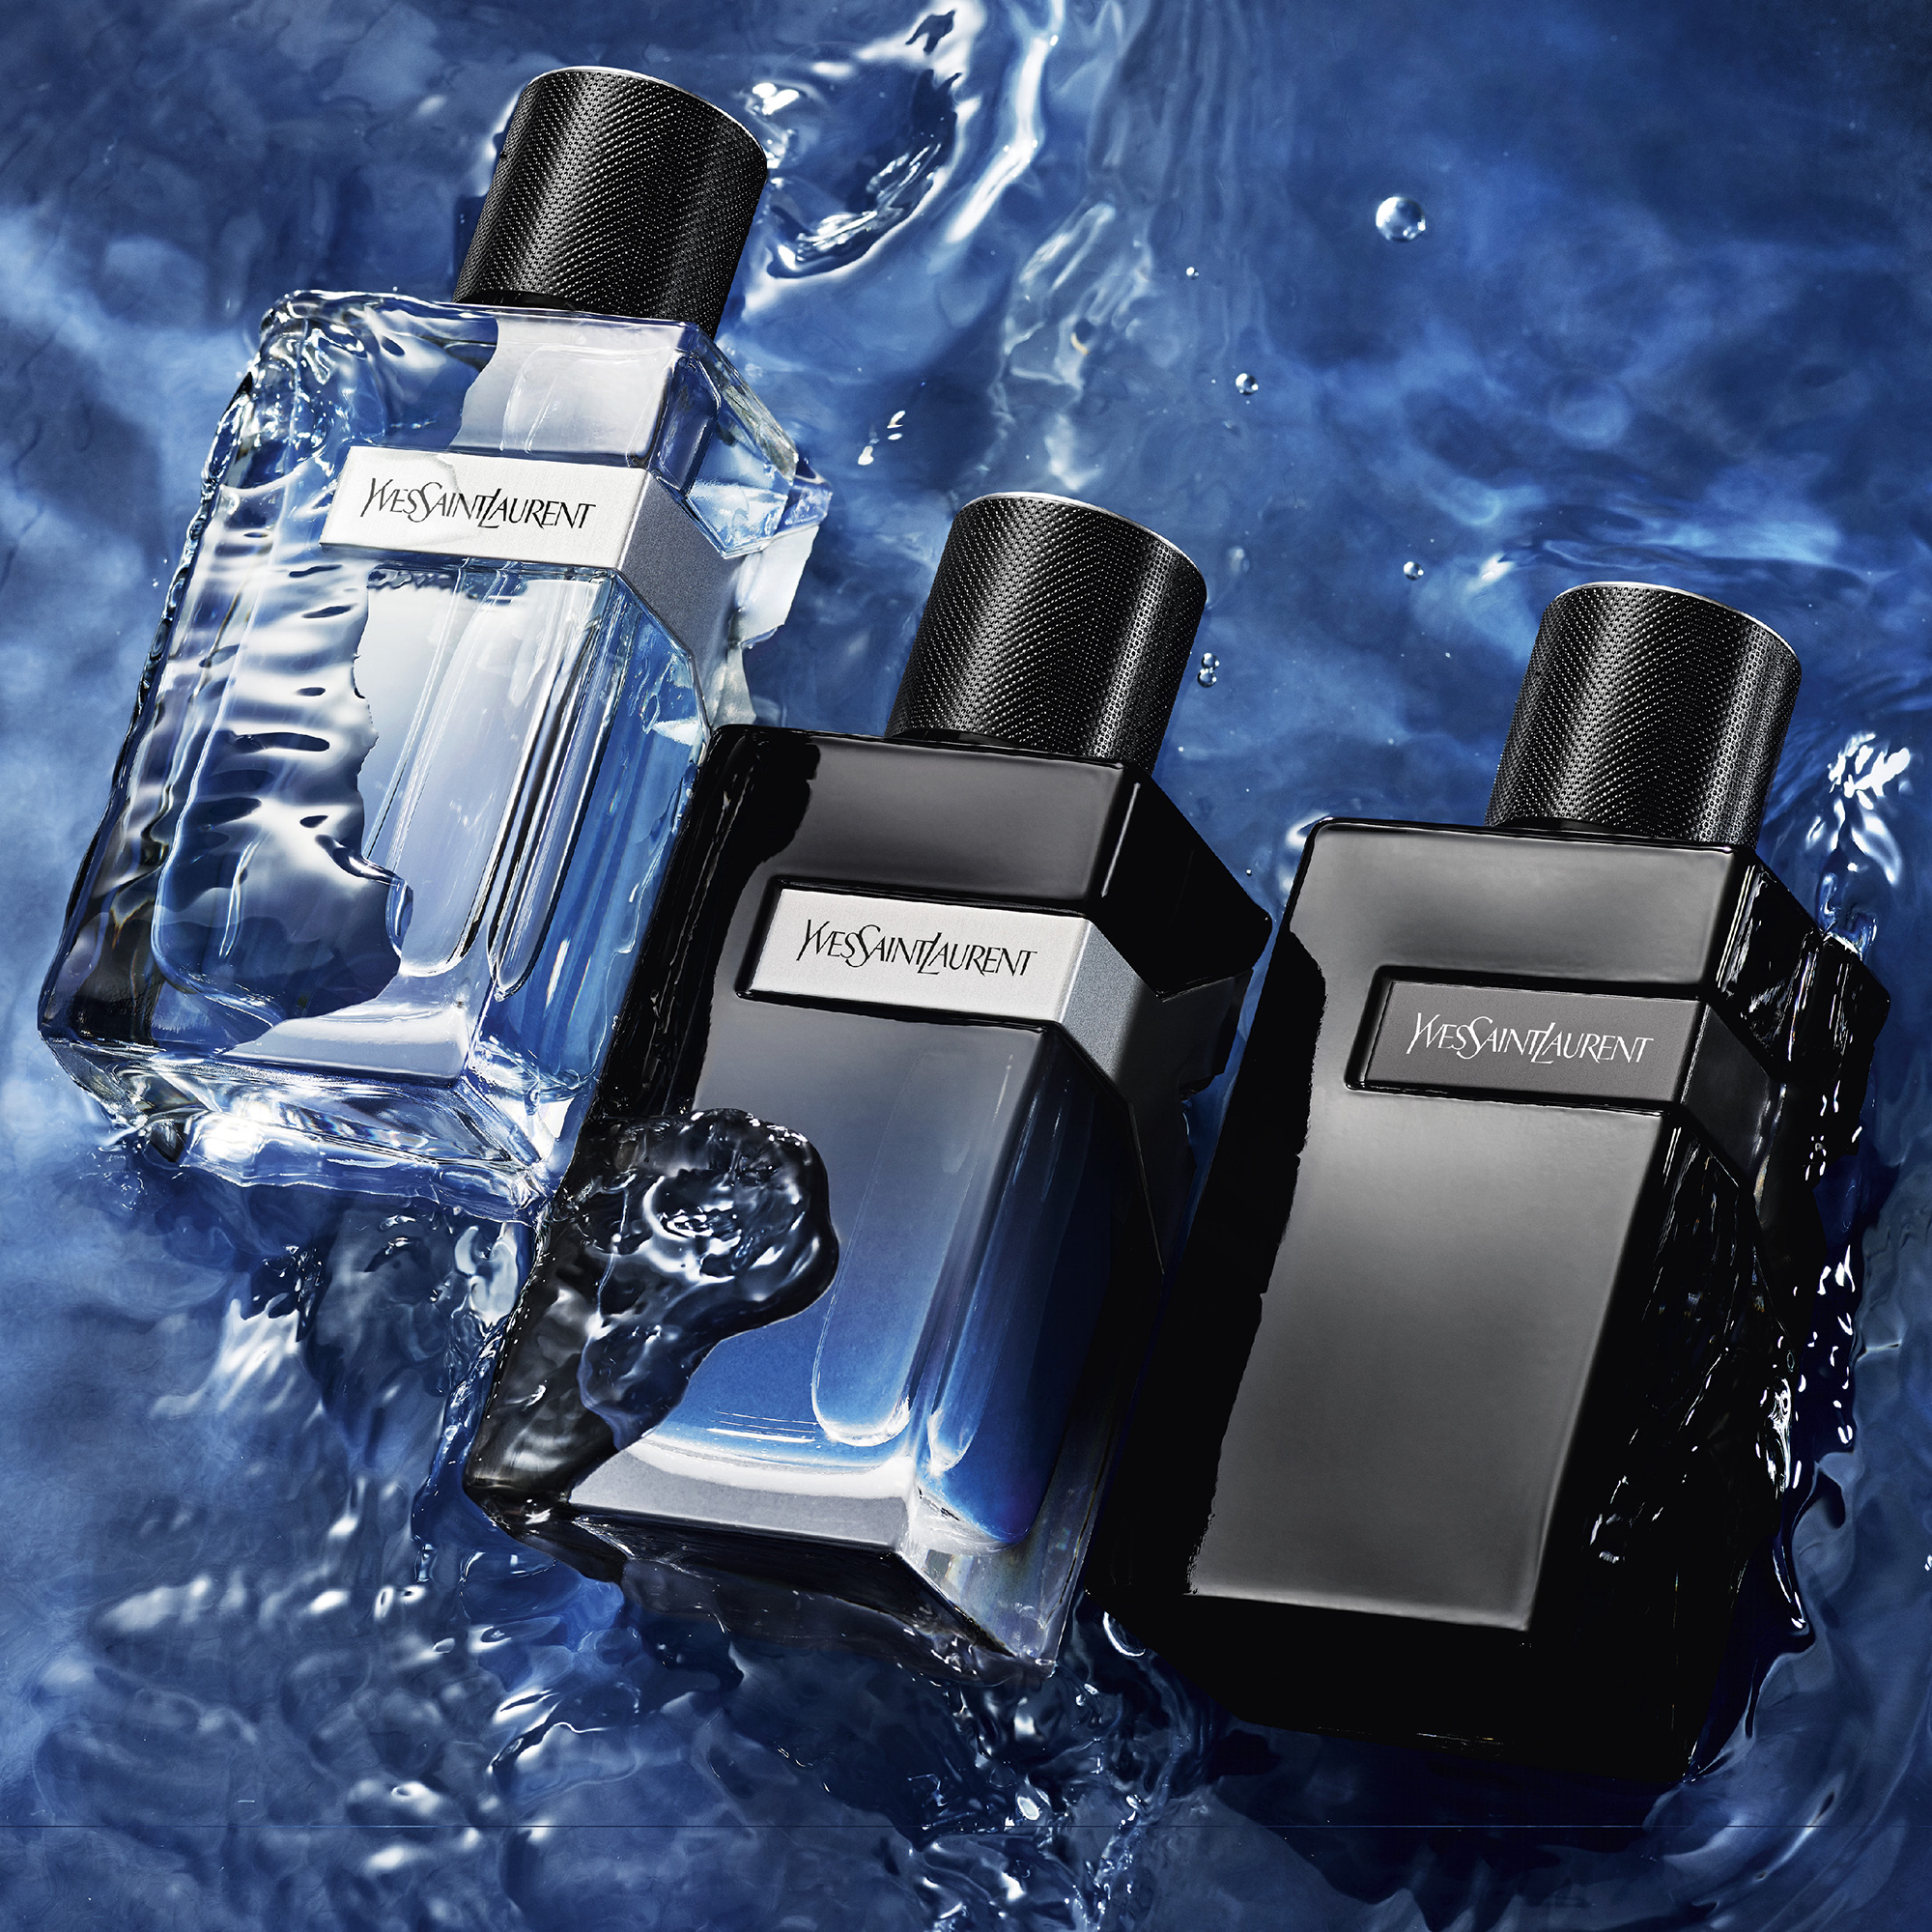 Yves Saint Laurent y edp 😎 #perfumes #perfumessexys #fragancias